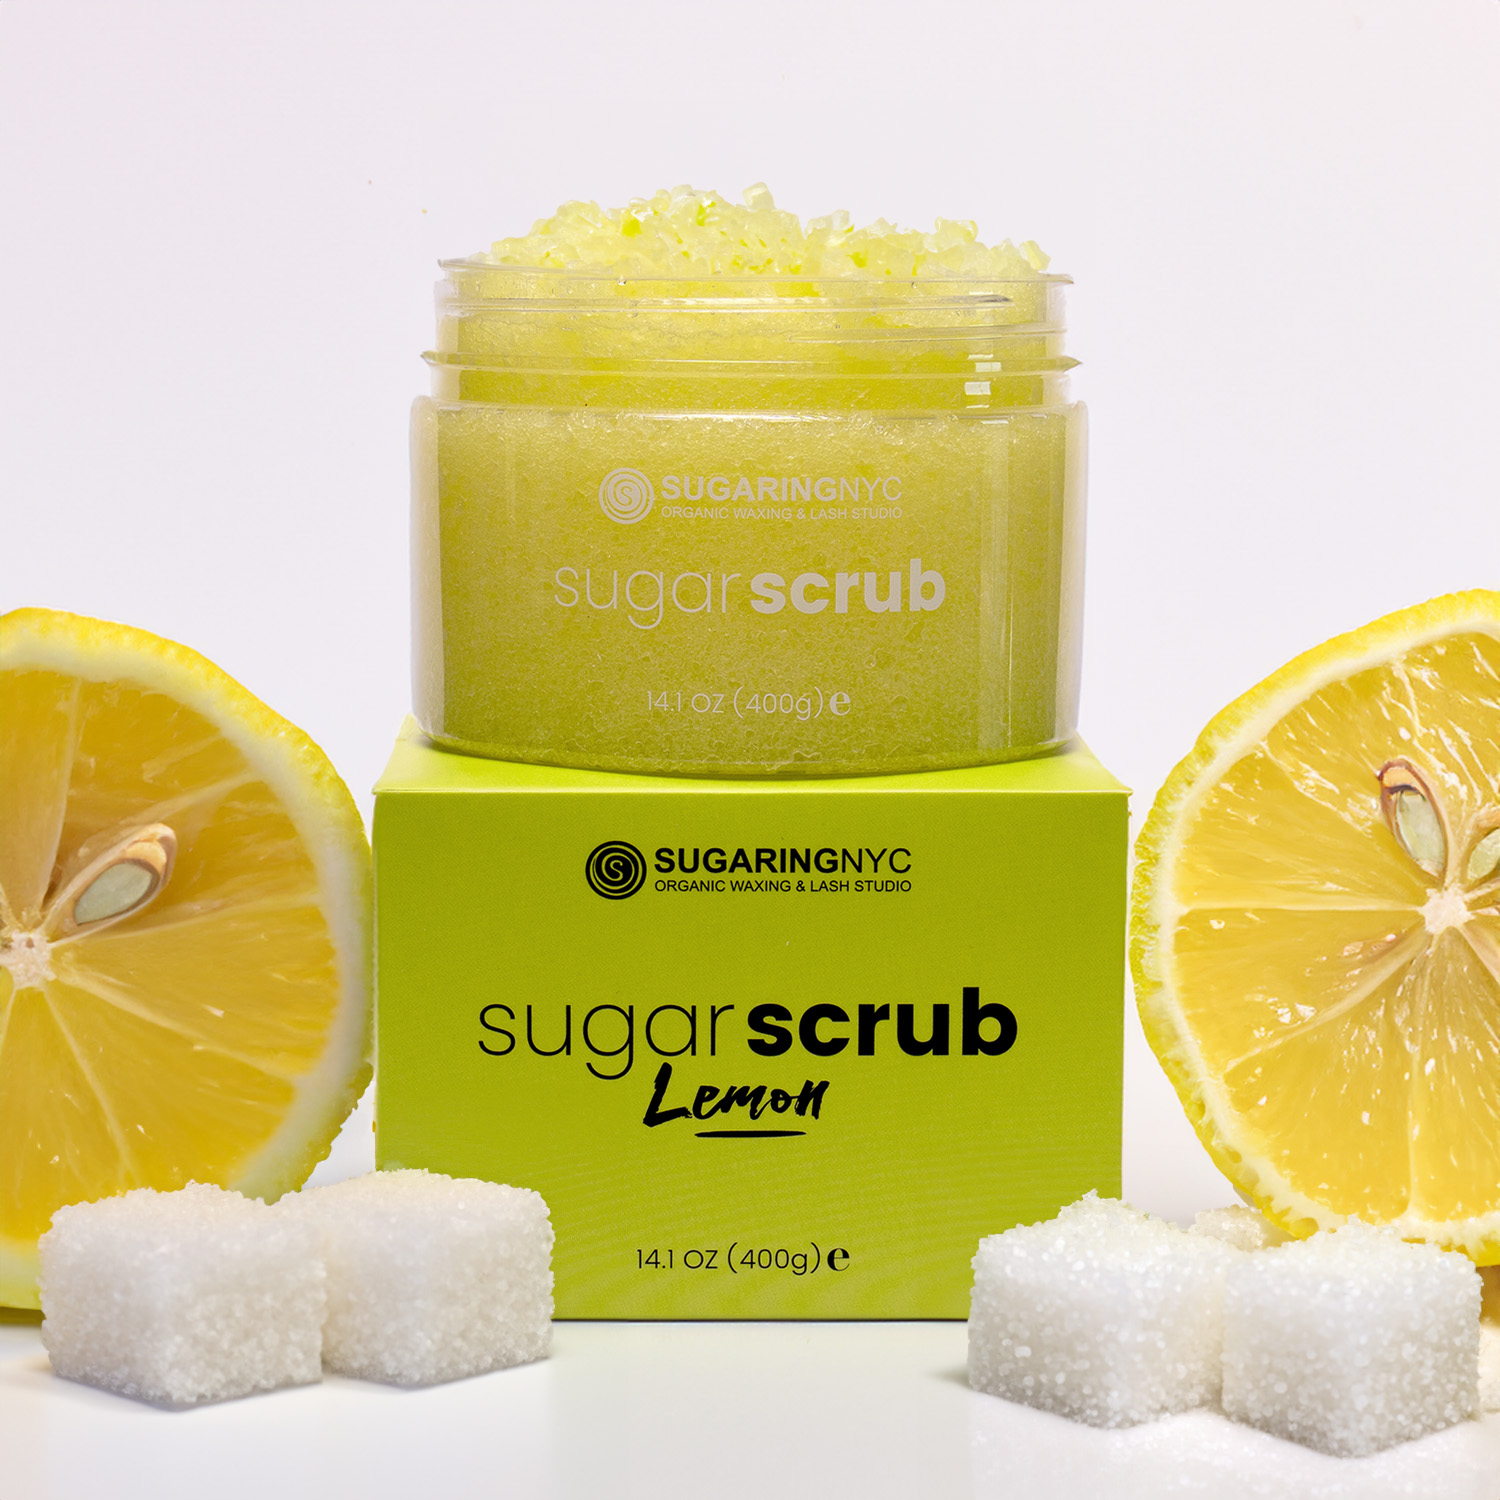 Sugaring NYC Signature Sugar Scrub – Lemon Kiss